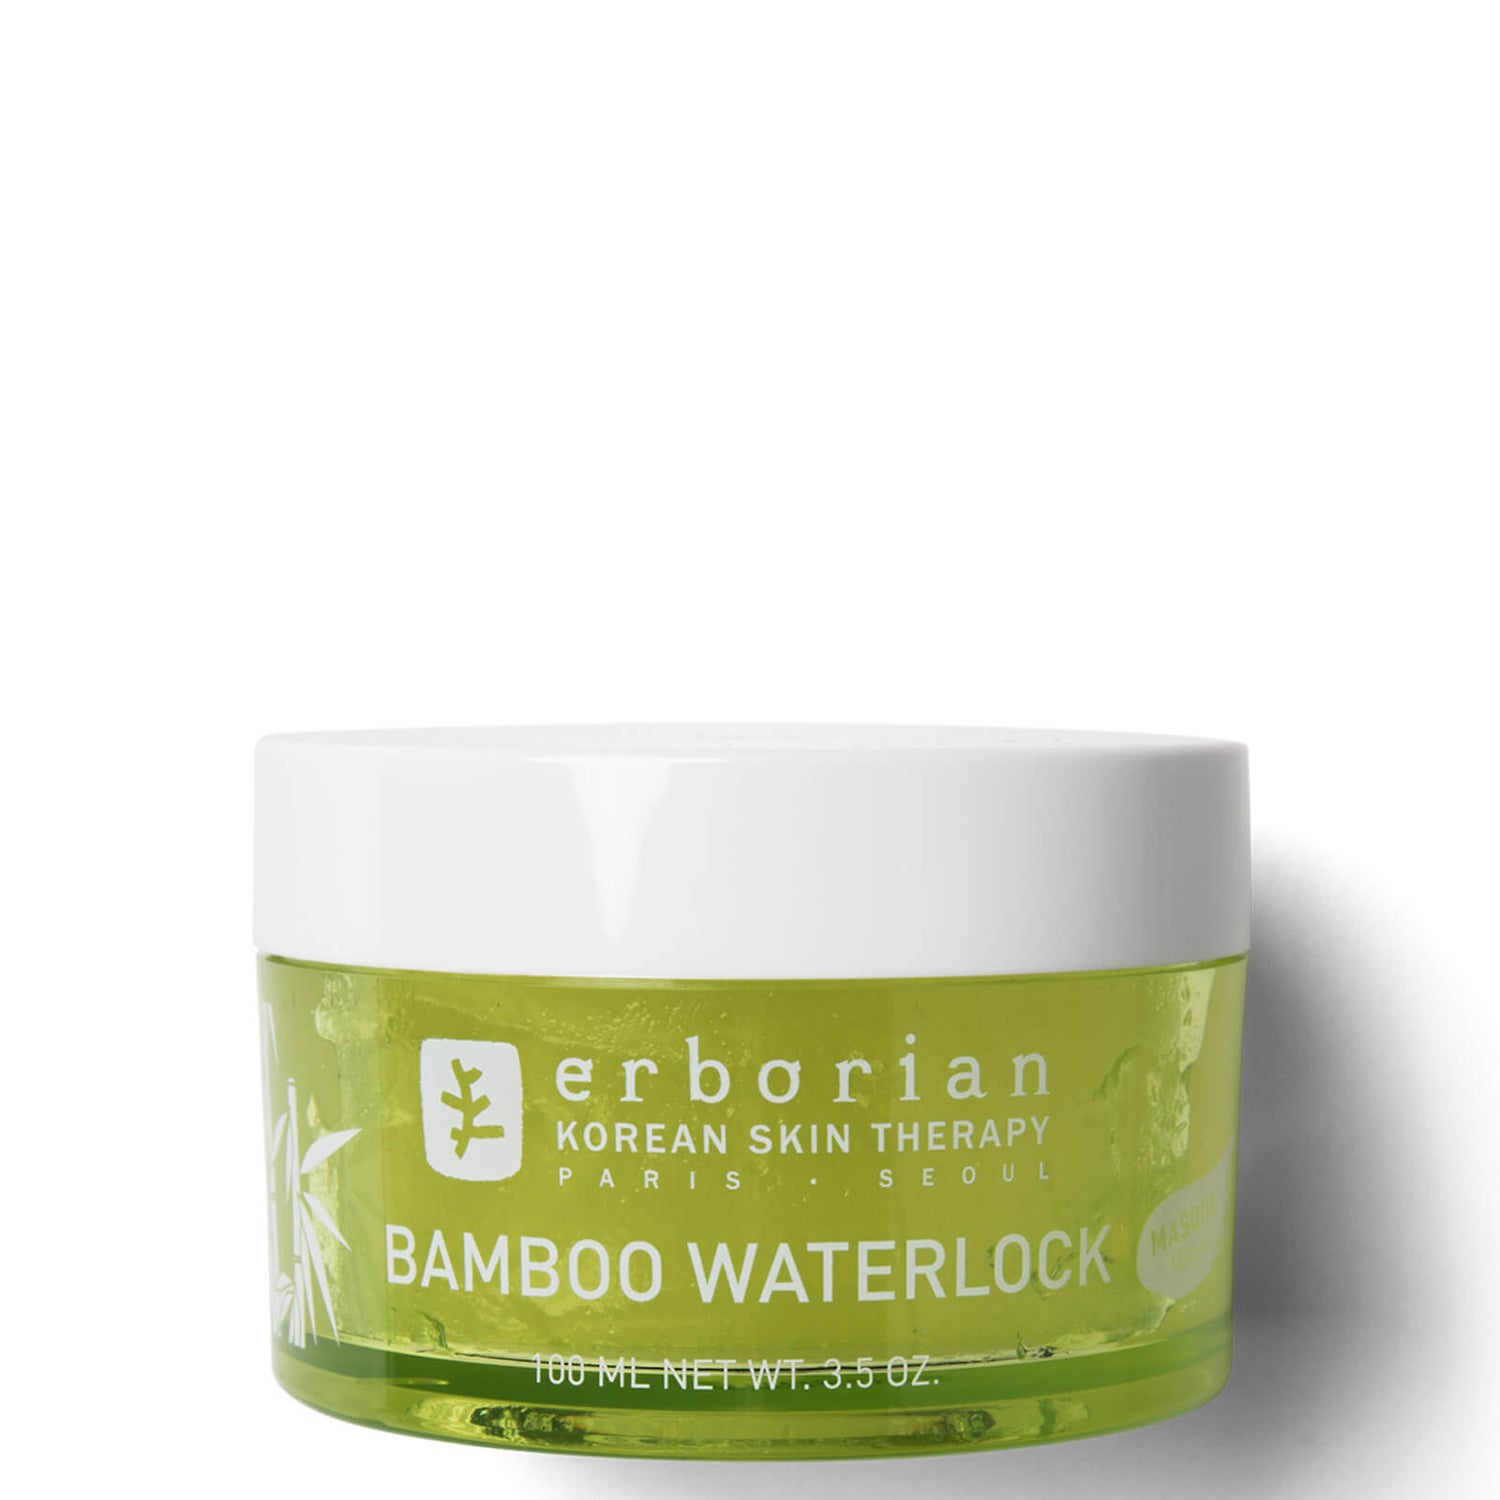 Erborian Bamboo Waterlock Intense Hydration Face Mask 3.5ml